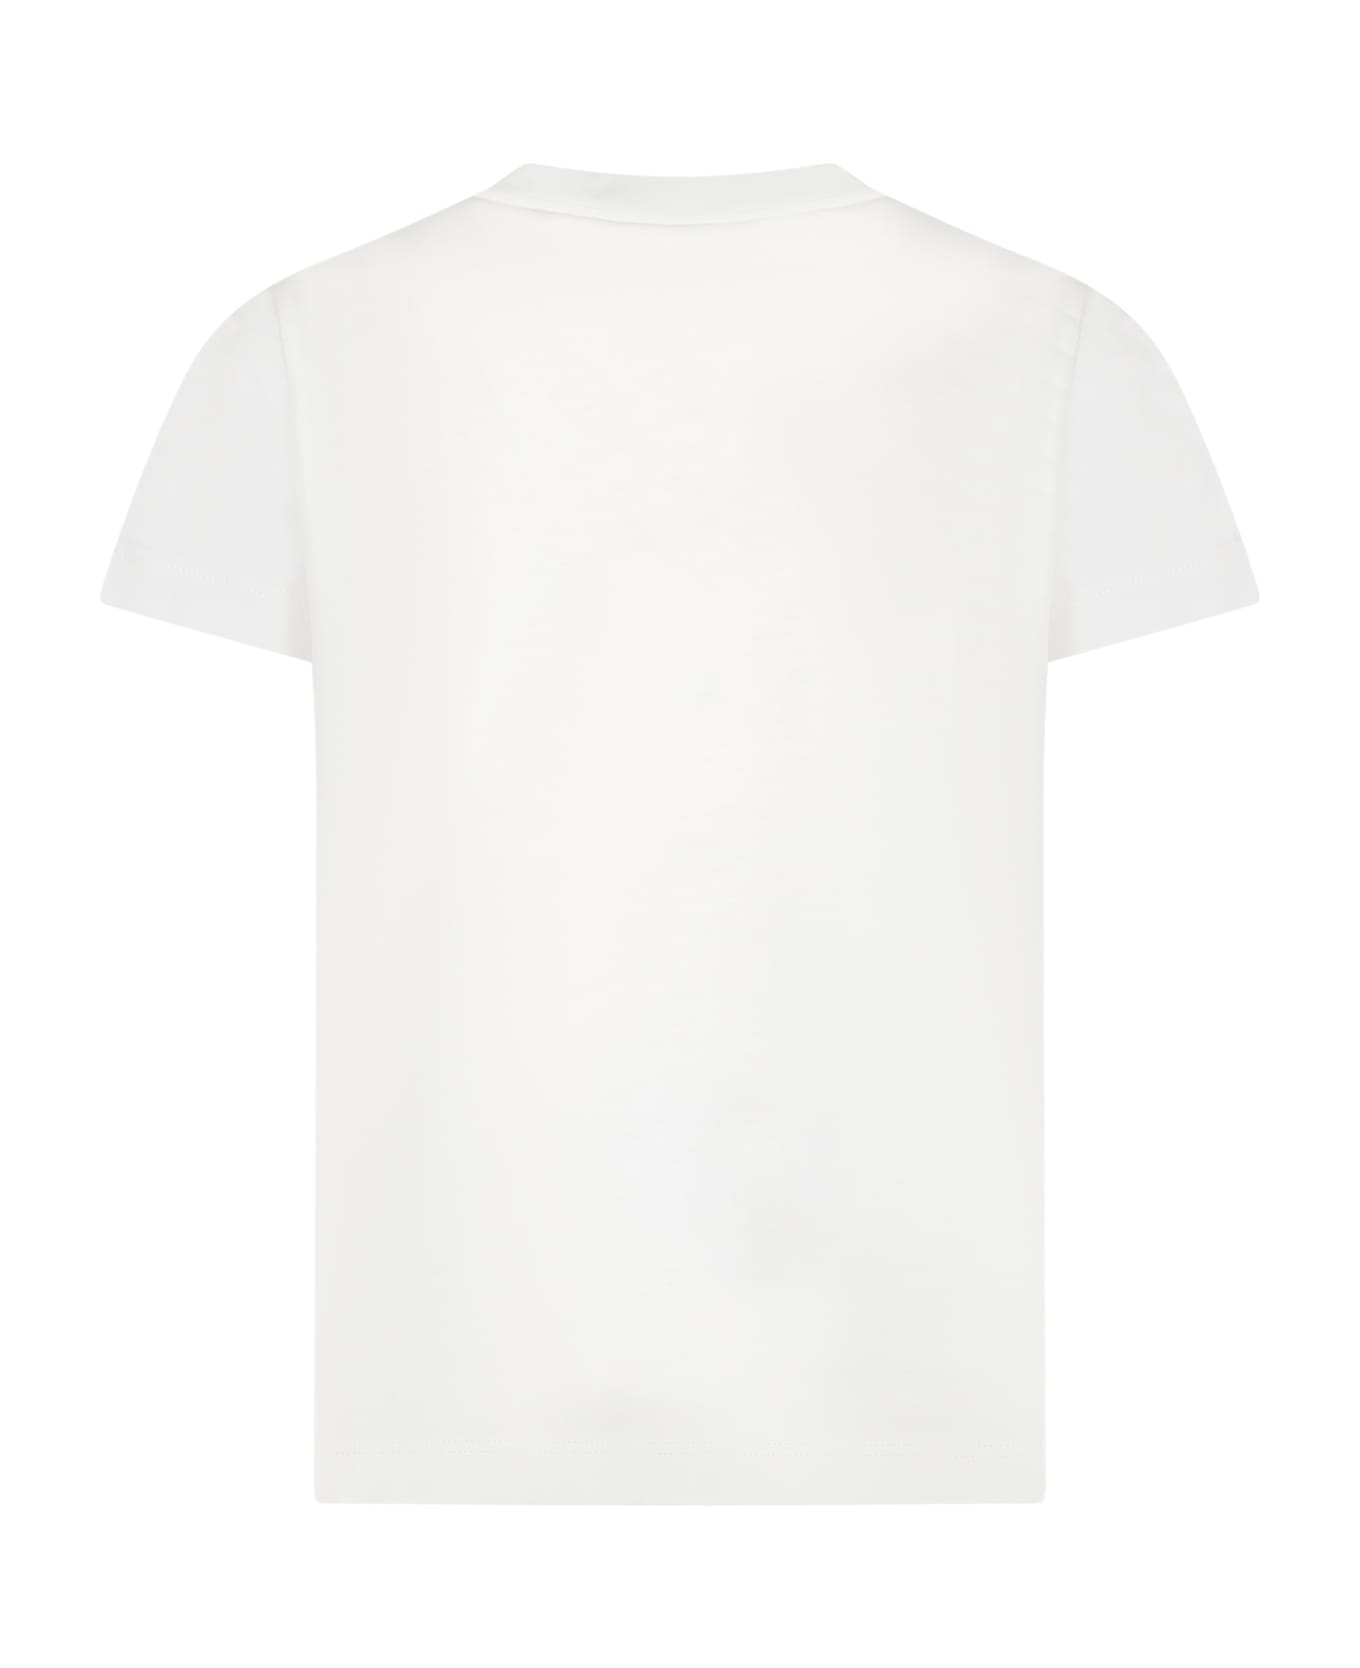 Fendi T-shirt Bianca Per Bamina Con Doppia F E Scritta - Bianco